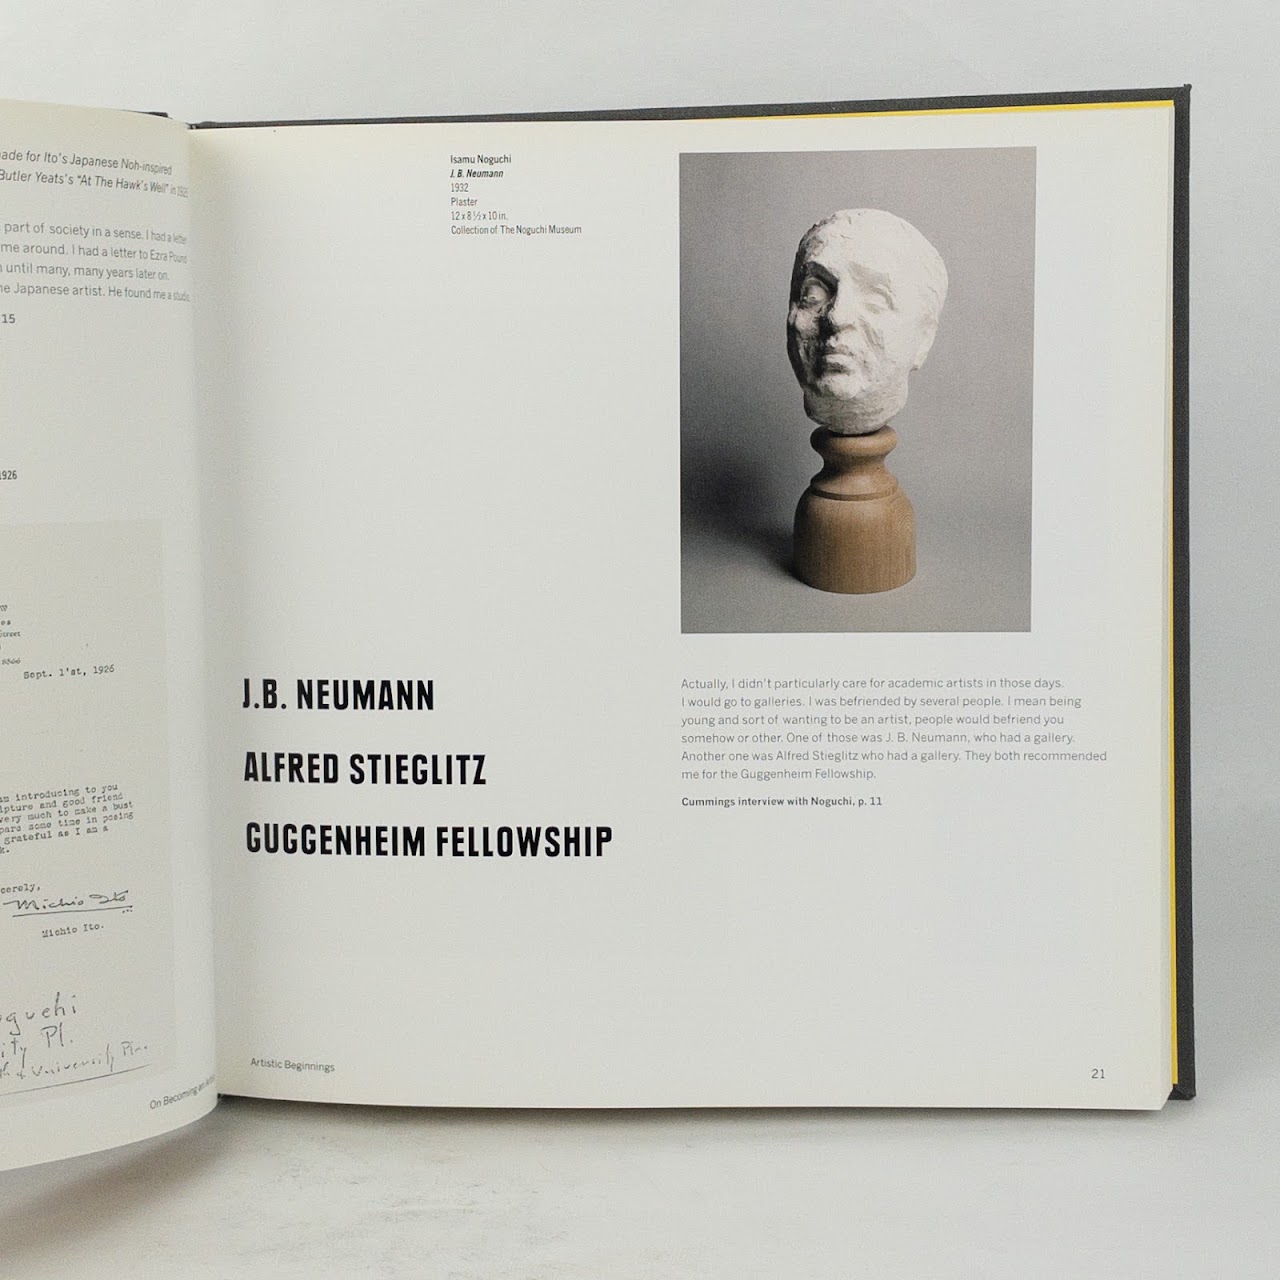 'On Becoming an Artist: Isamu Noguchi and His Contemporaries, 1922-1960' RARE Book